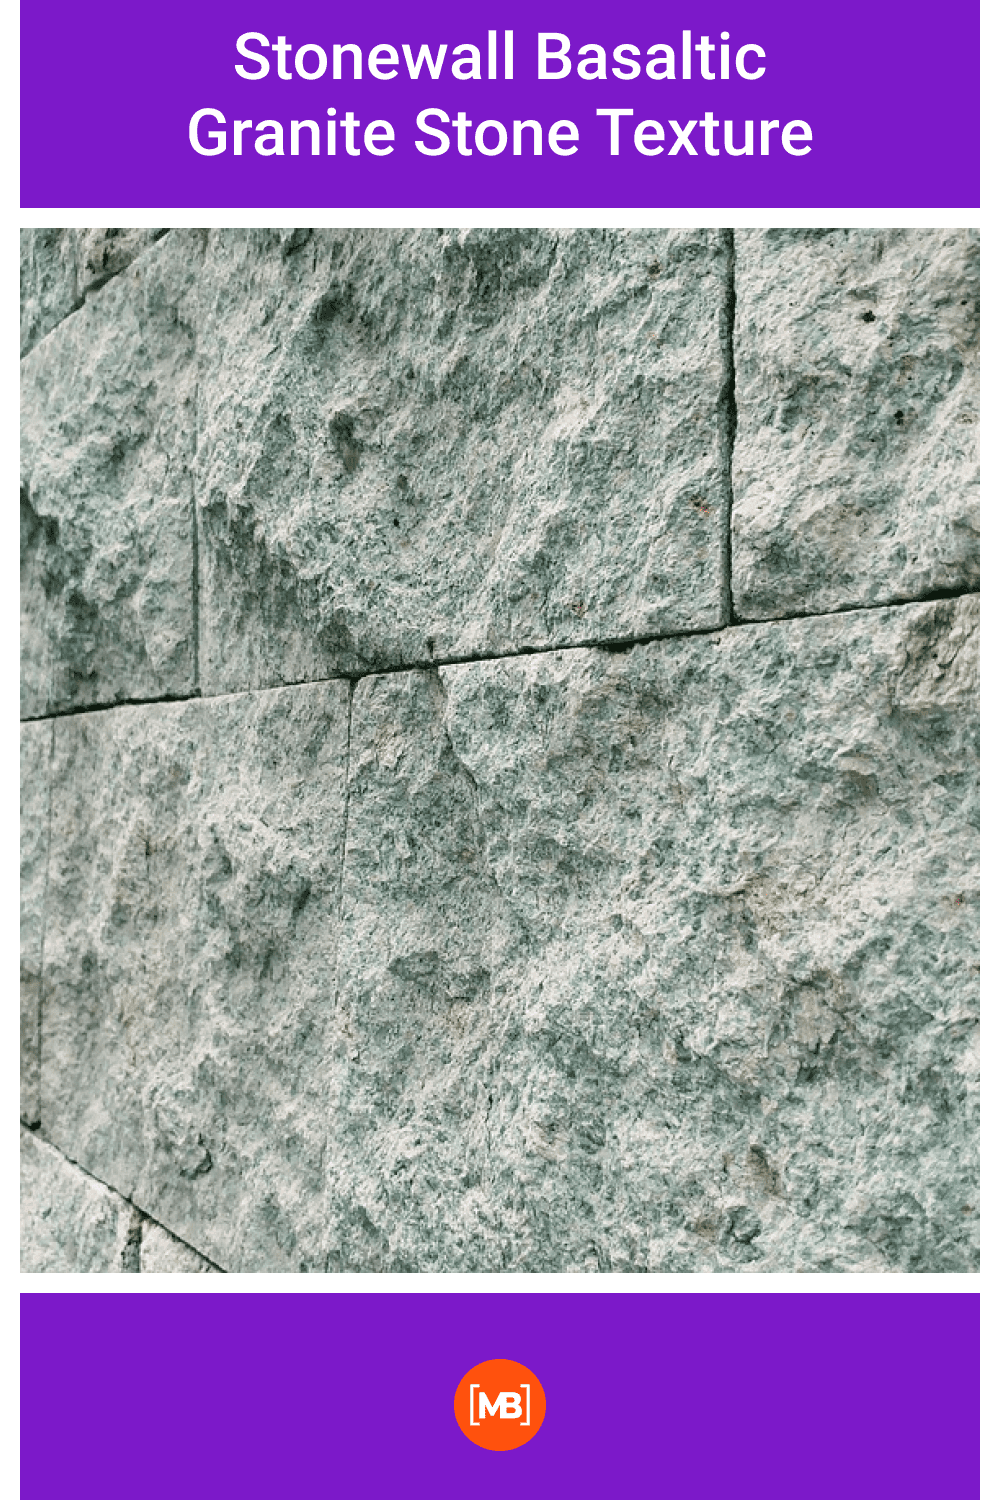 Stonewall basaltic granite stone texture.